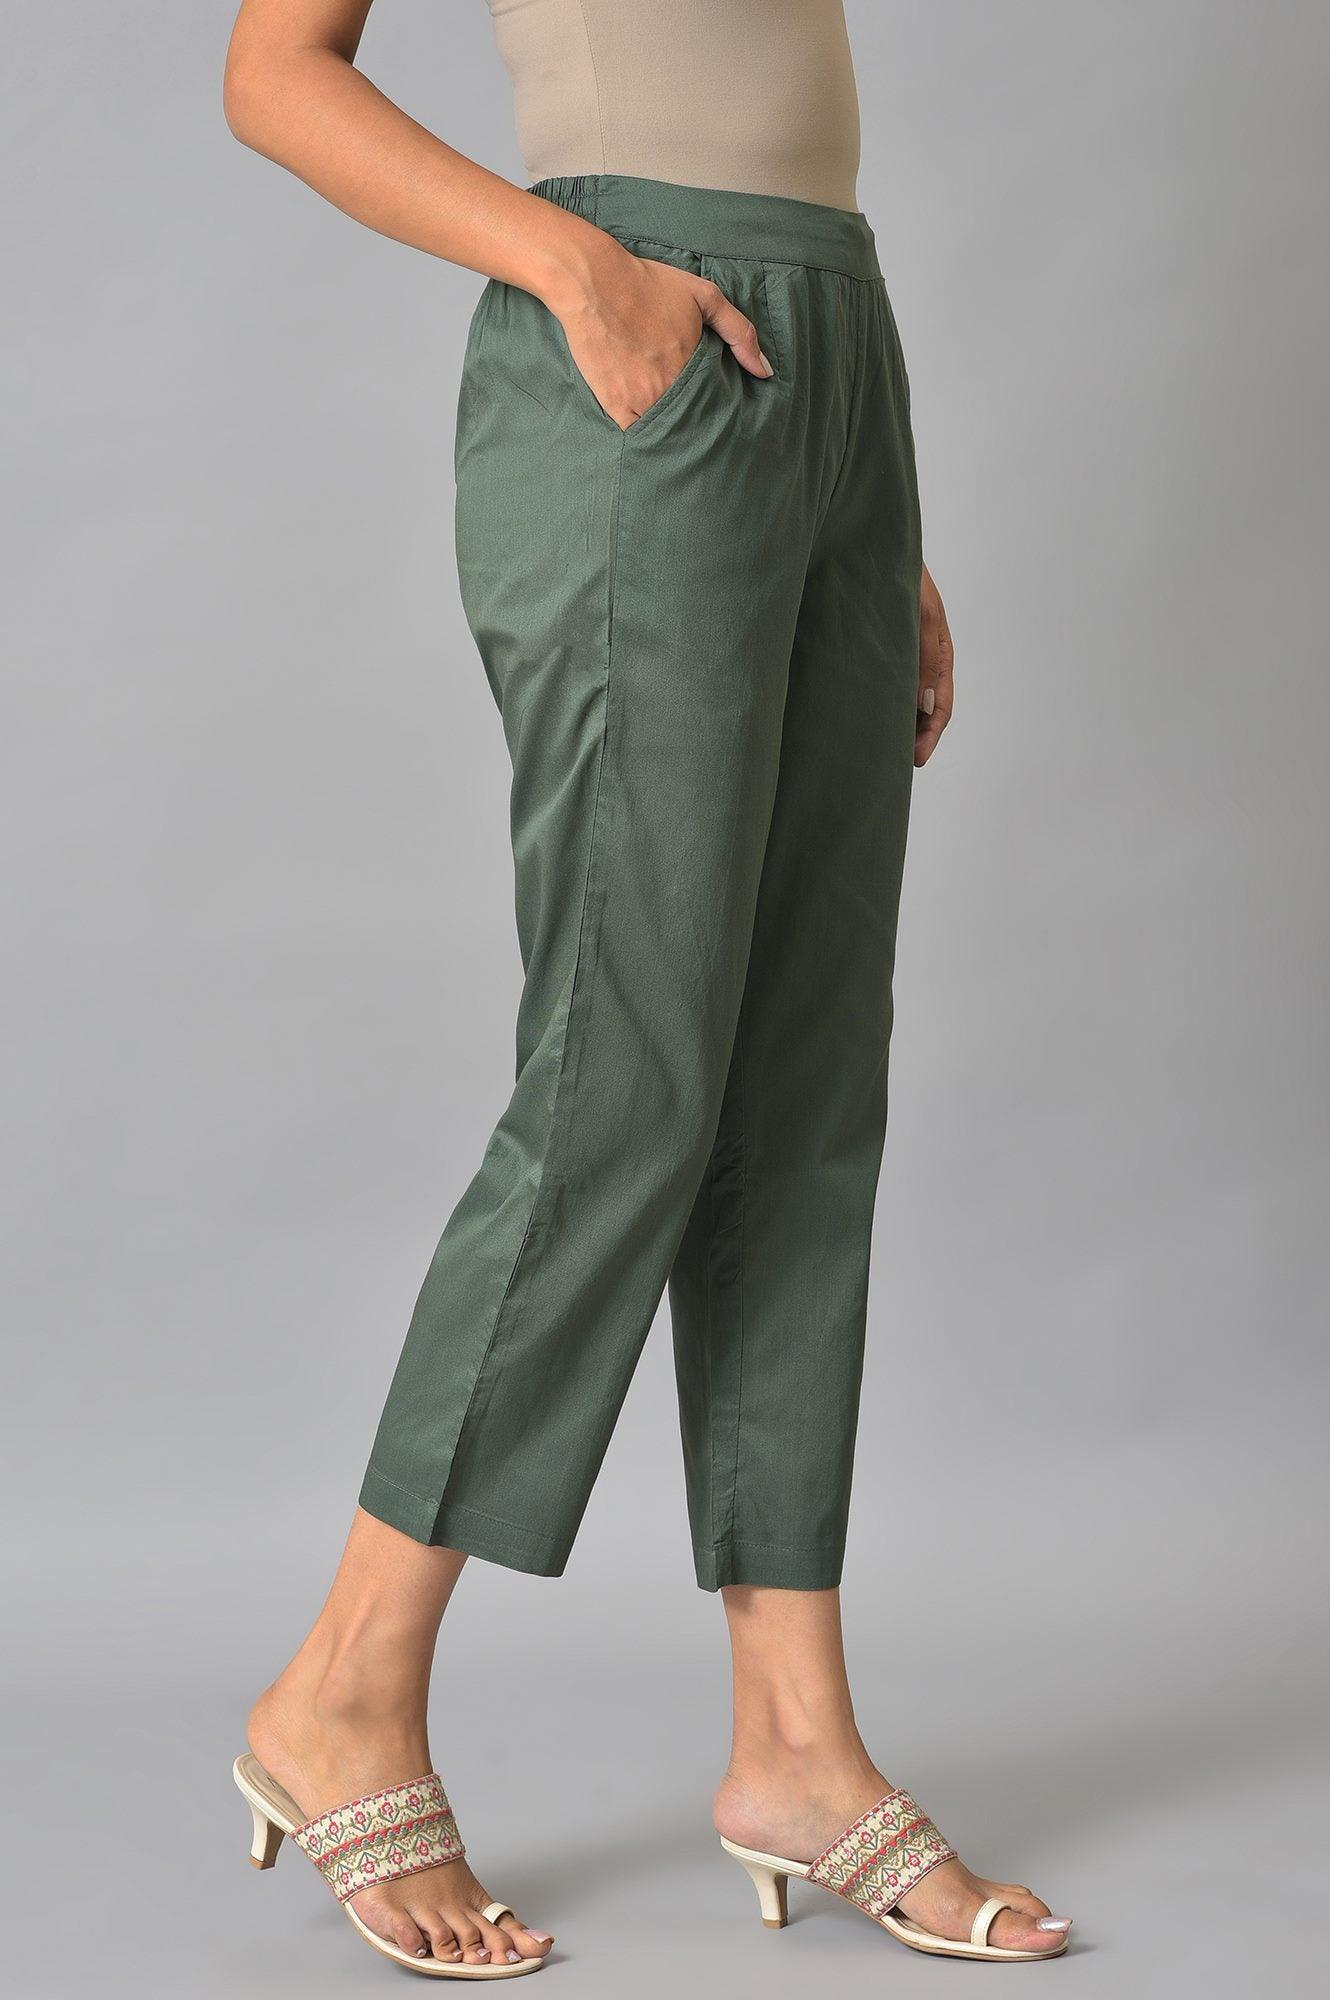 Olive Green Straight Pants - wforwoman